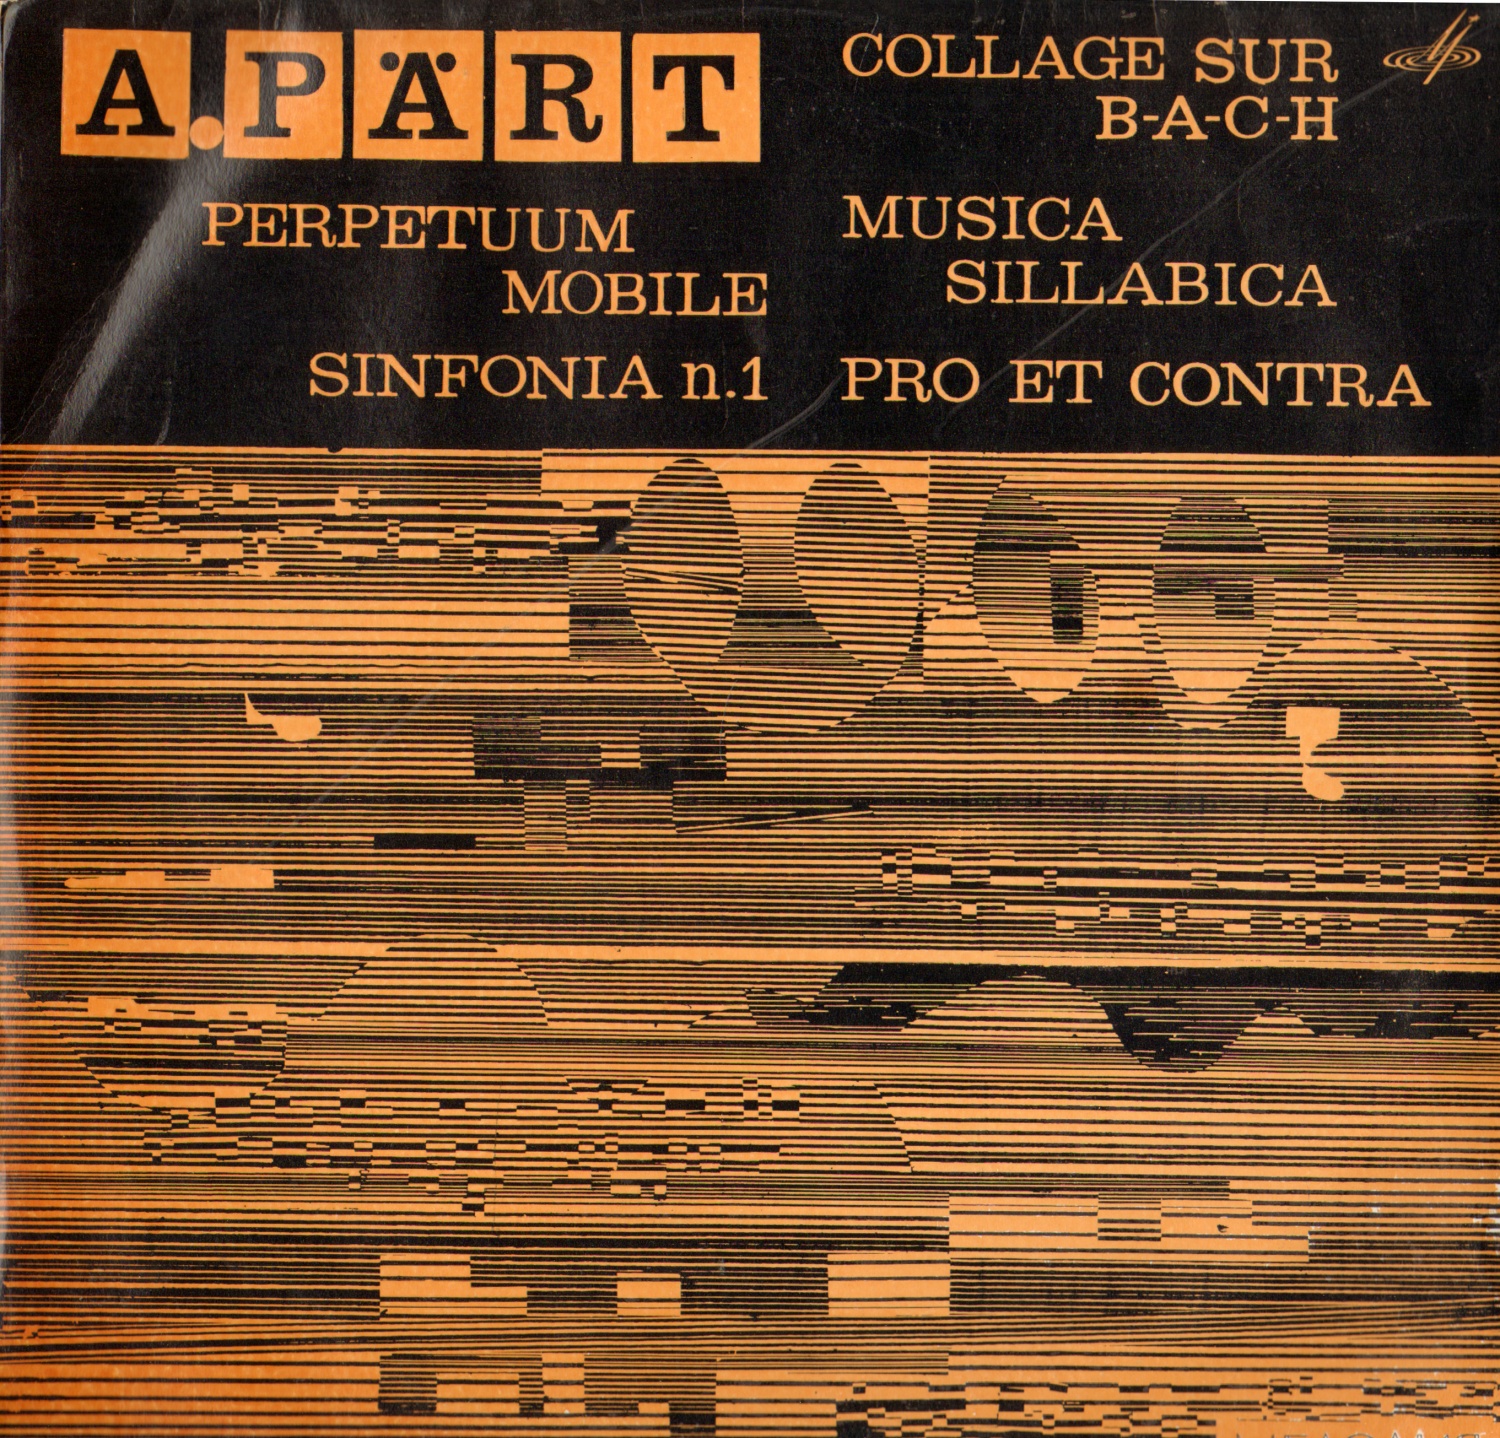 Arvo Pärt (А. Пярт) ‎– Sinfonia n.1 / Perpetuum mobile / Collage sur B-A-C-H / Musica sillabica / Pro et contra